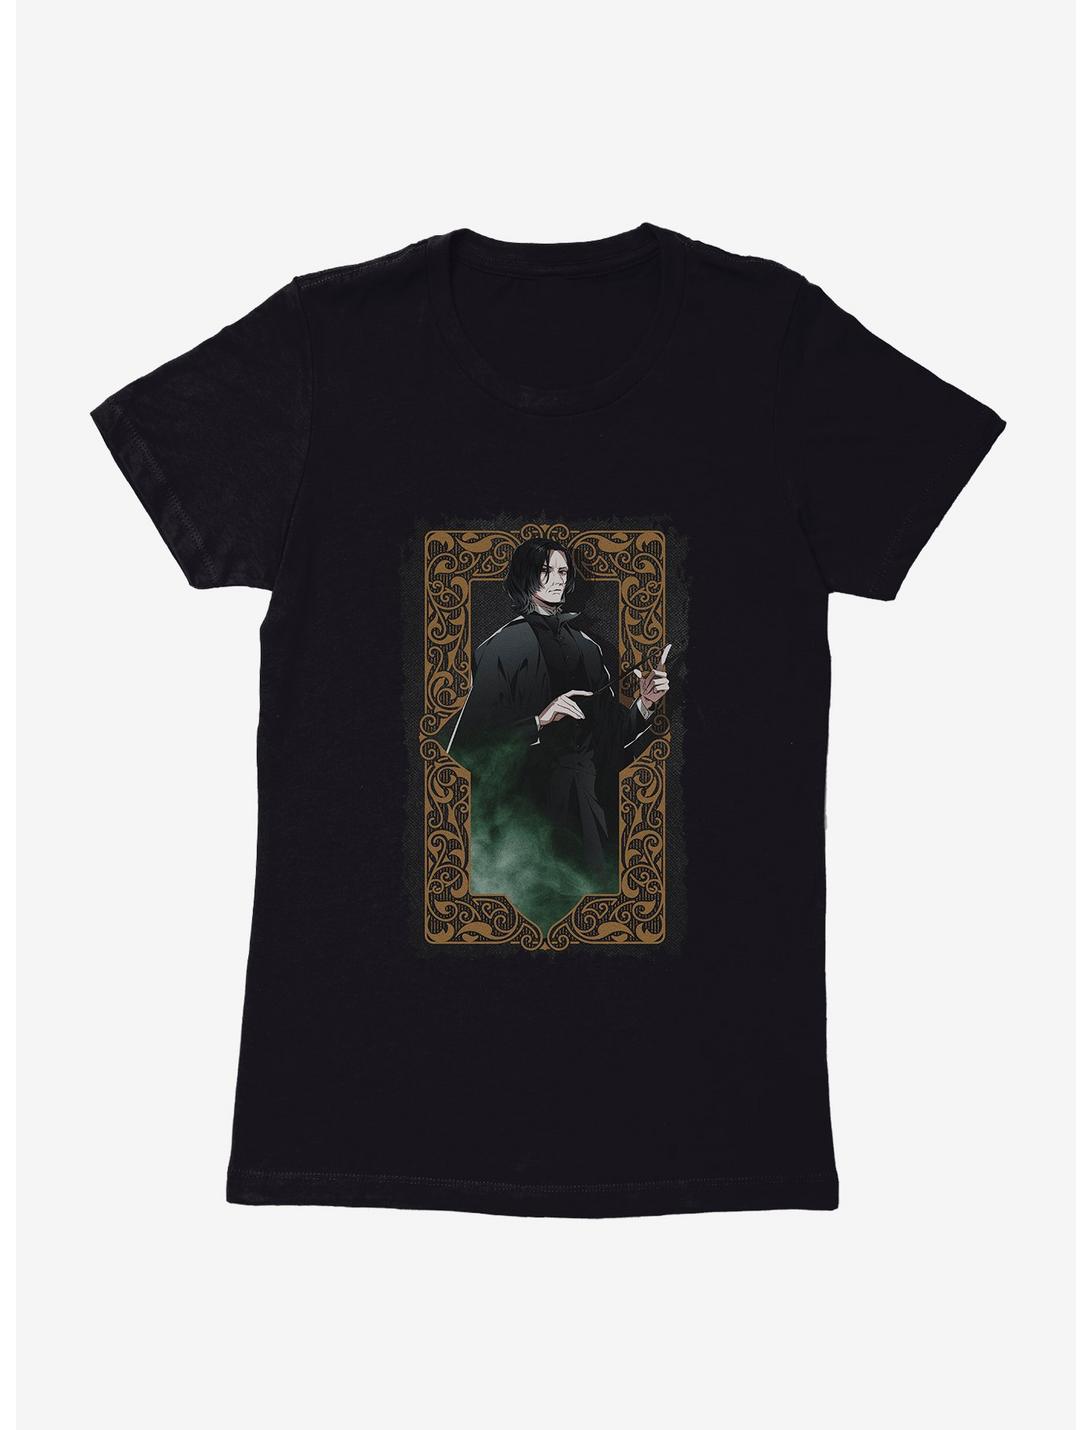 Harry Potter Snape Frame Anime Style Womens T-Shirt, , hi-res